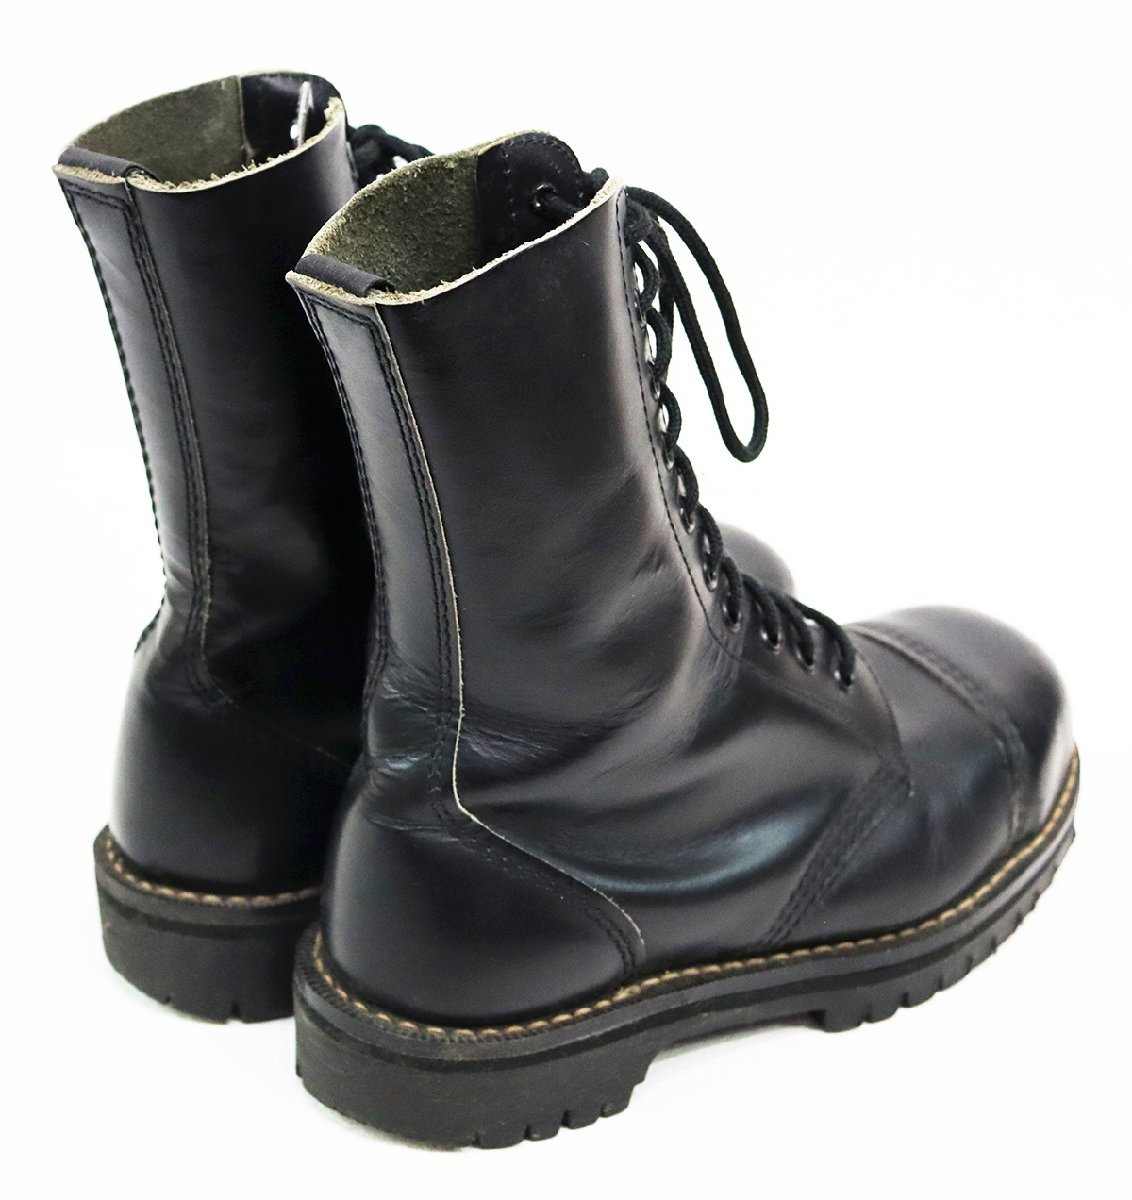 Getta Grip (geta grip ) 10HOLE BOOT BLACK / 10 hole boots cap tu Britain made size UK4 / Work boots 